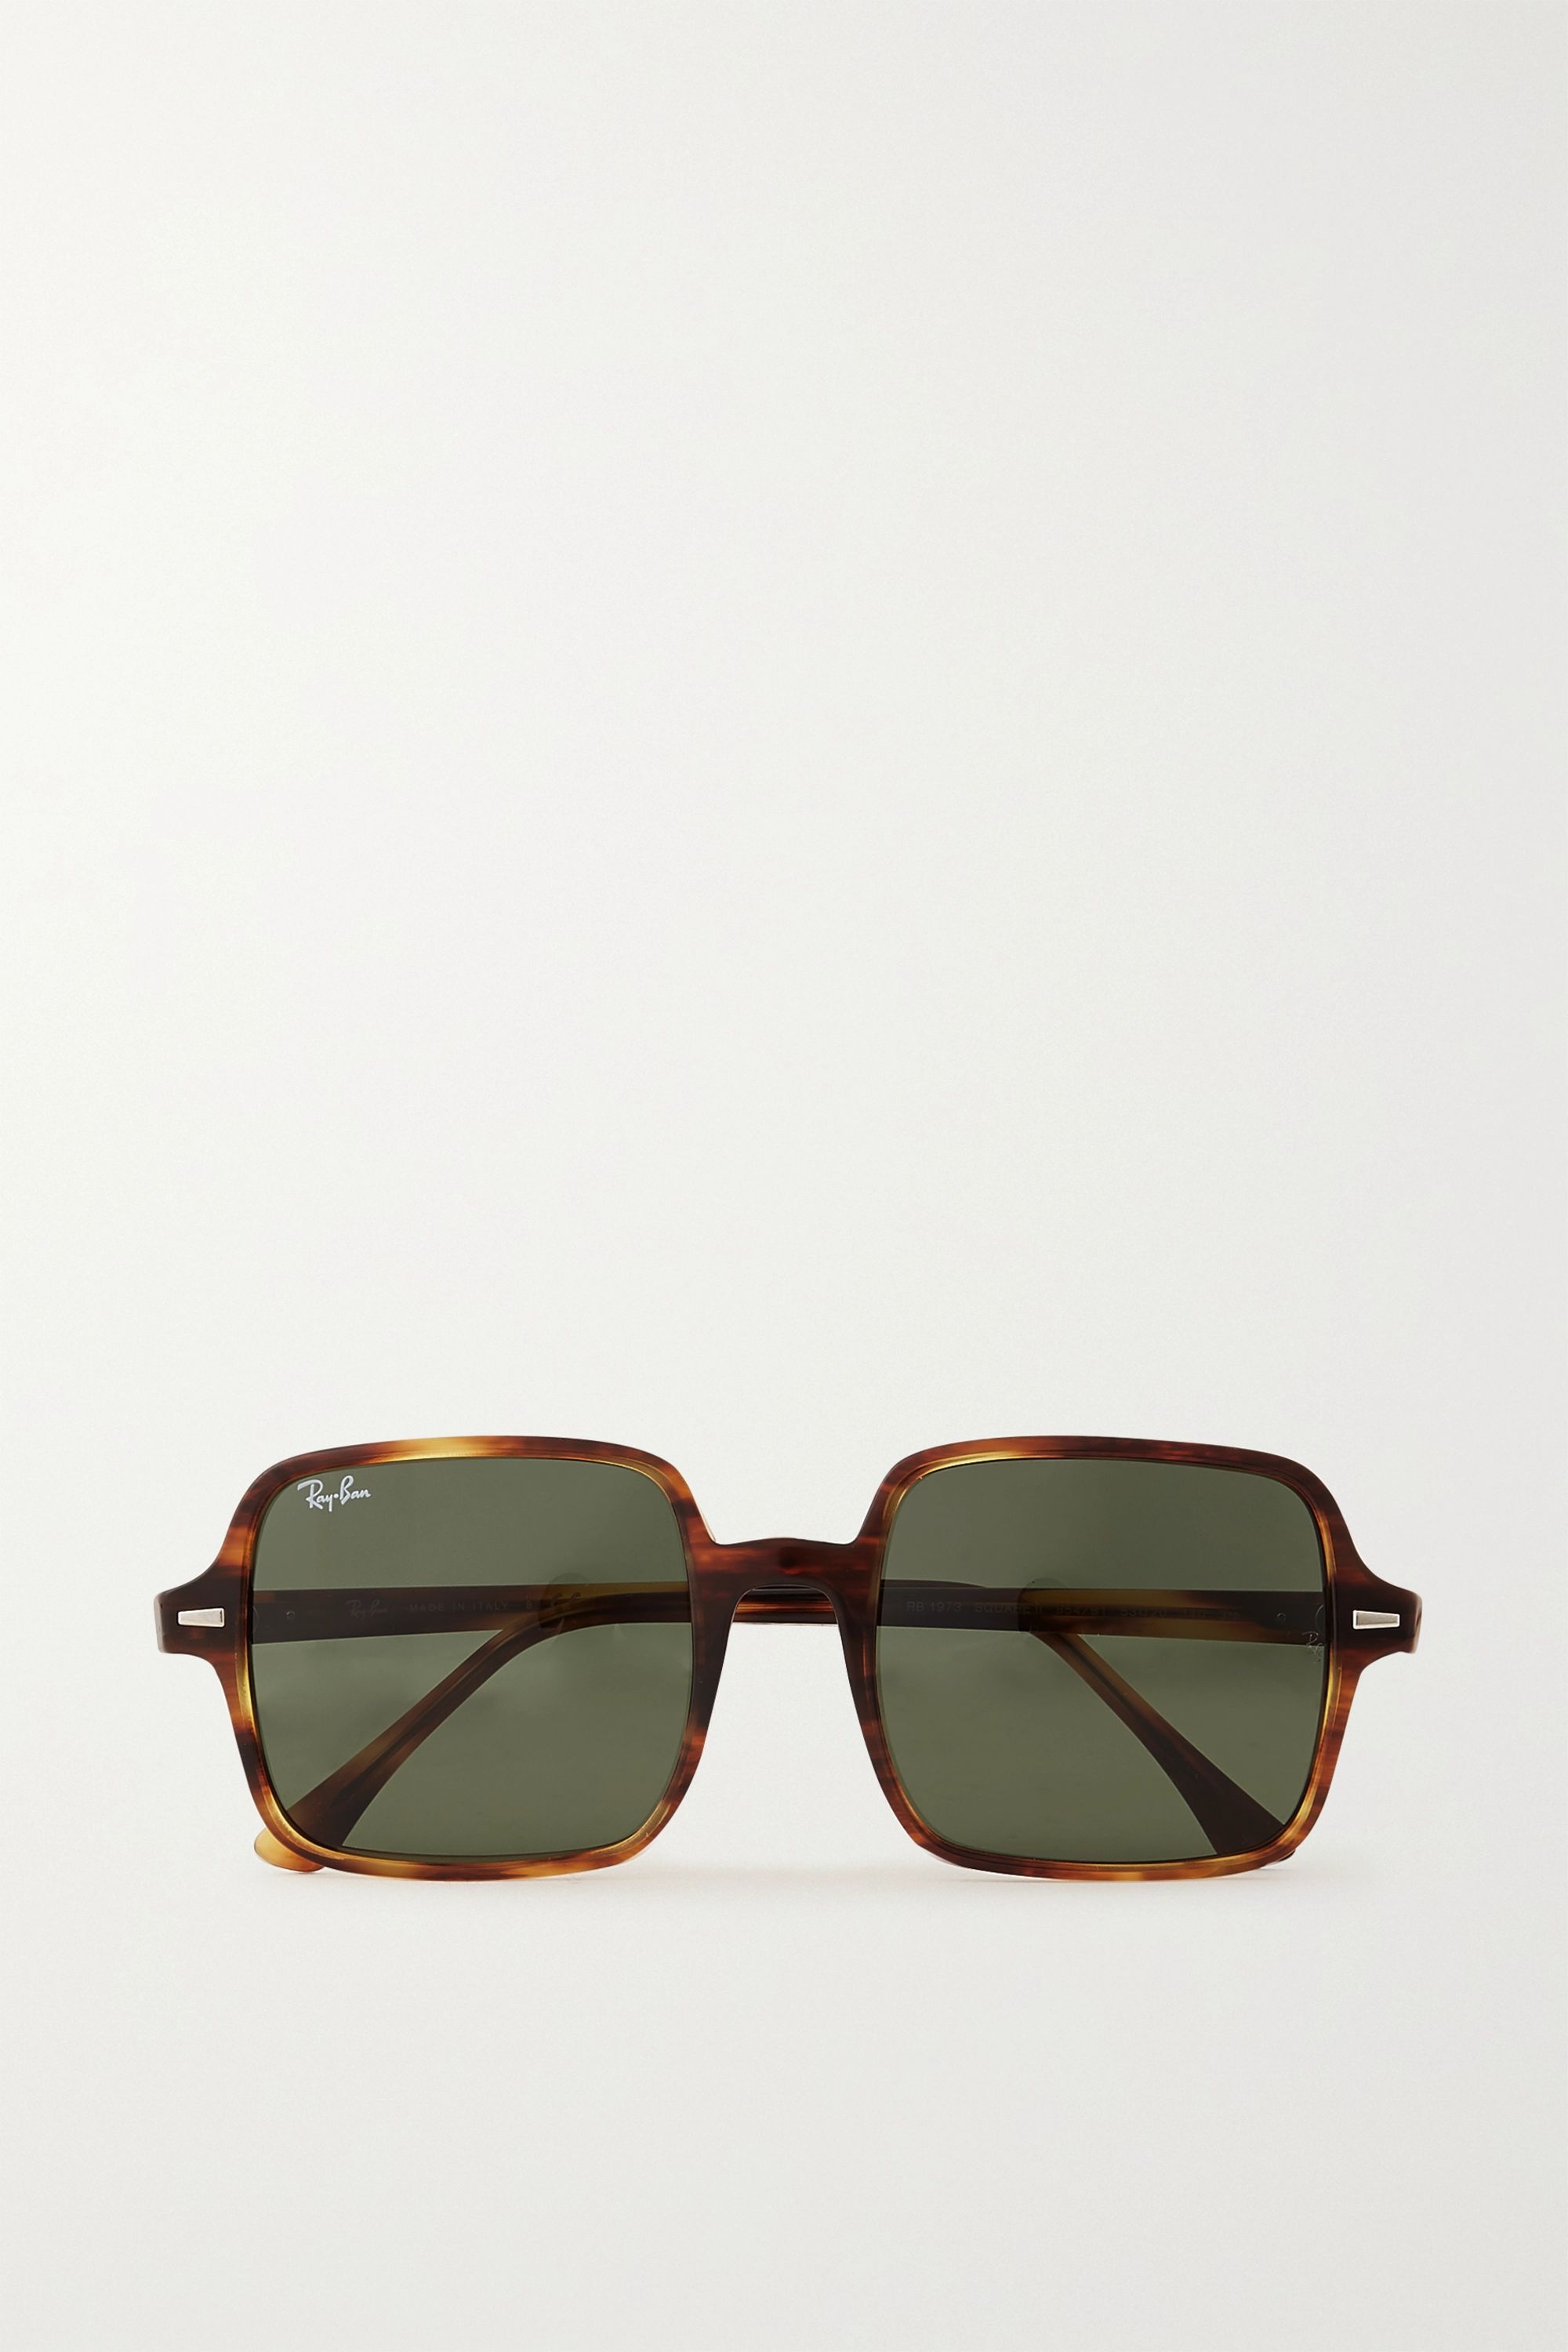 Square-Frame Tortoiseshell Acetate Sunglasses